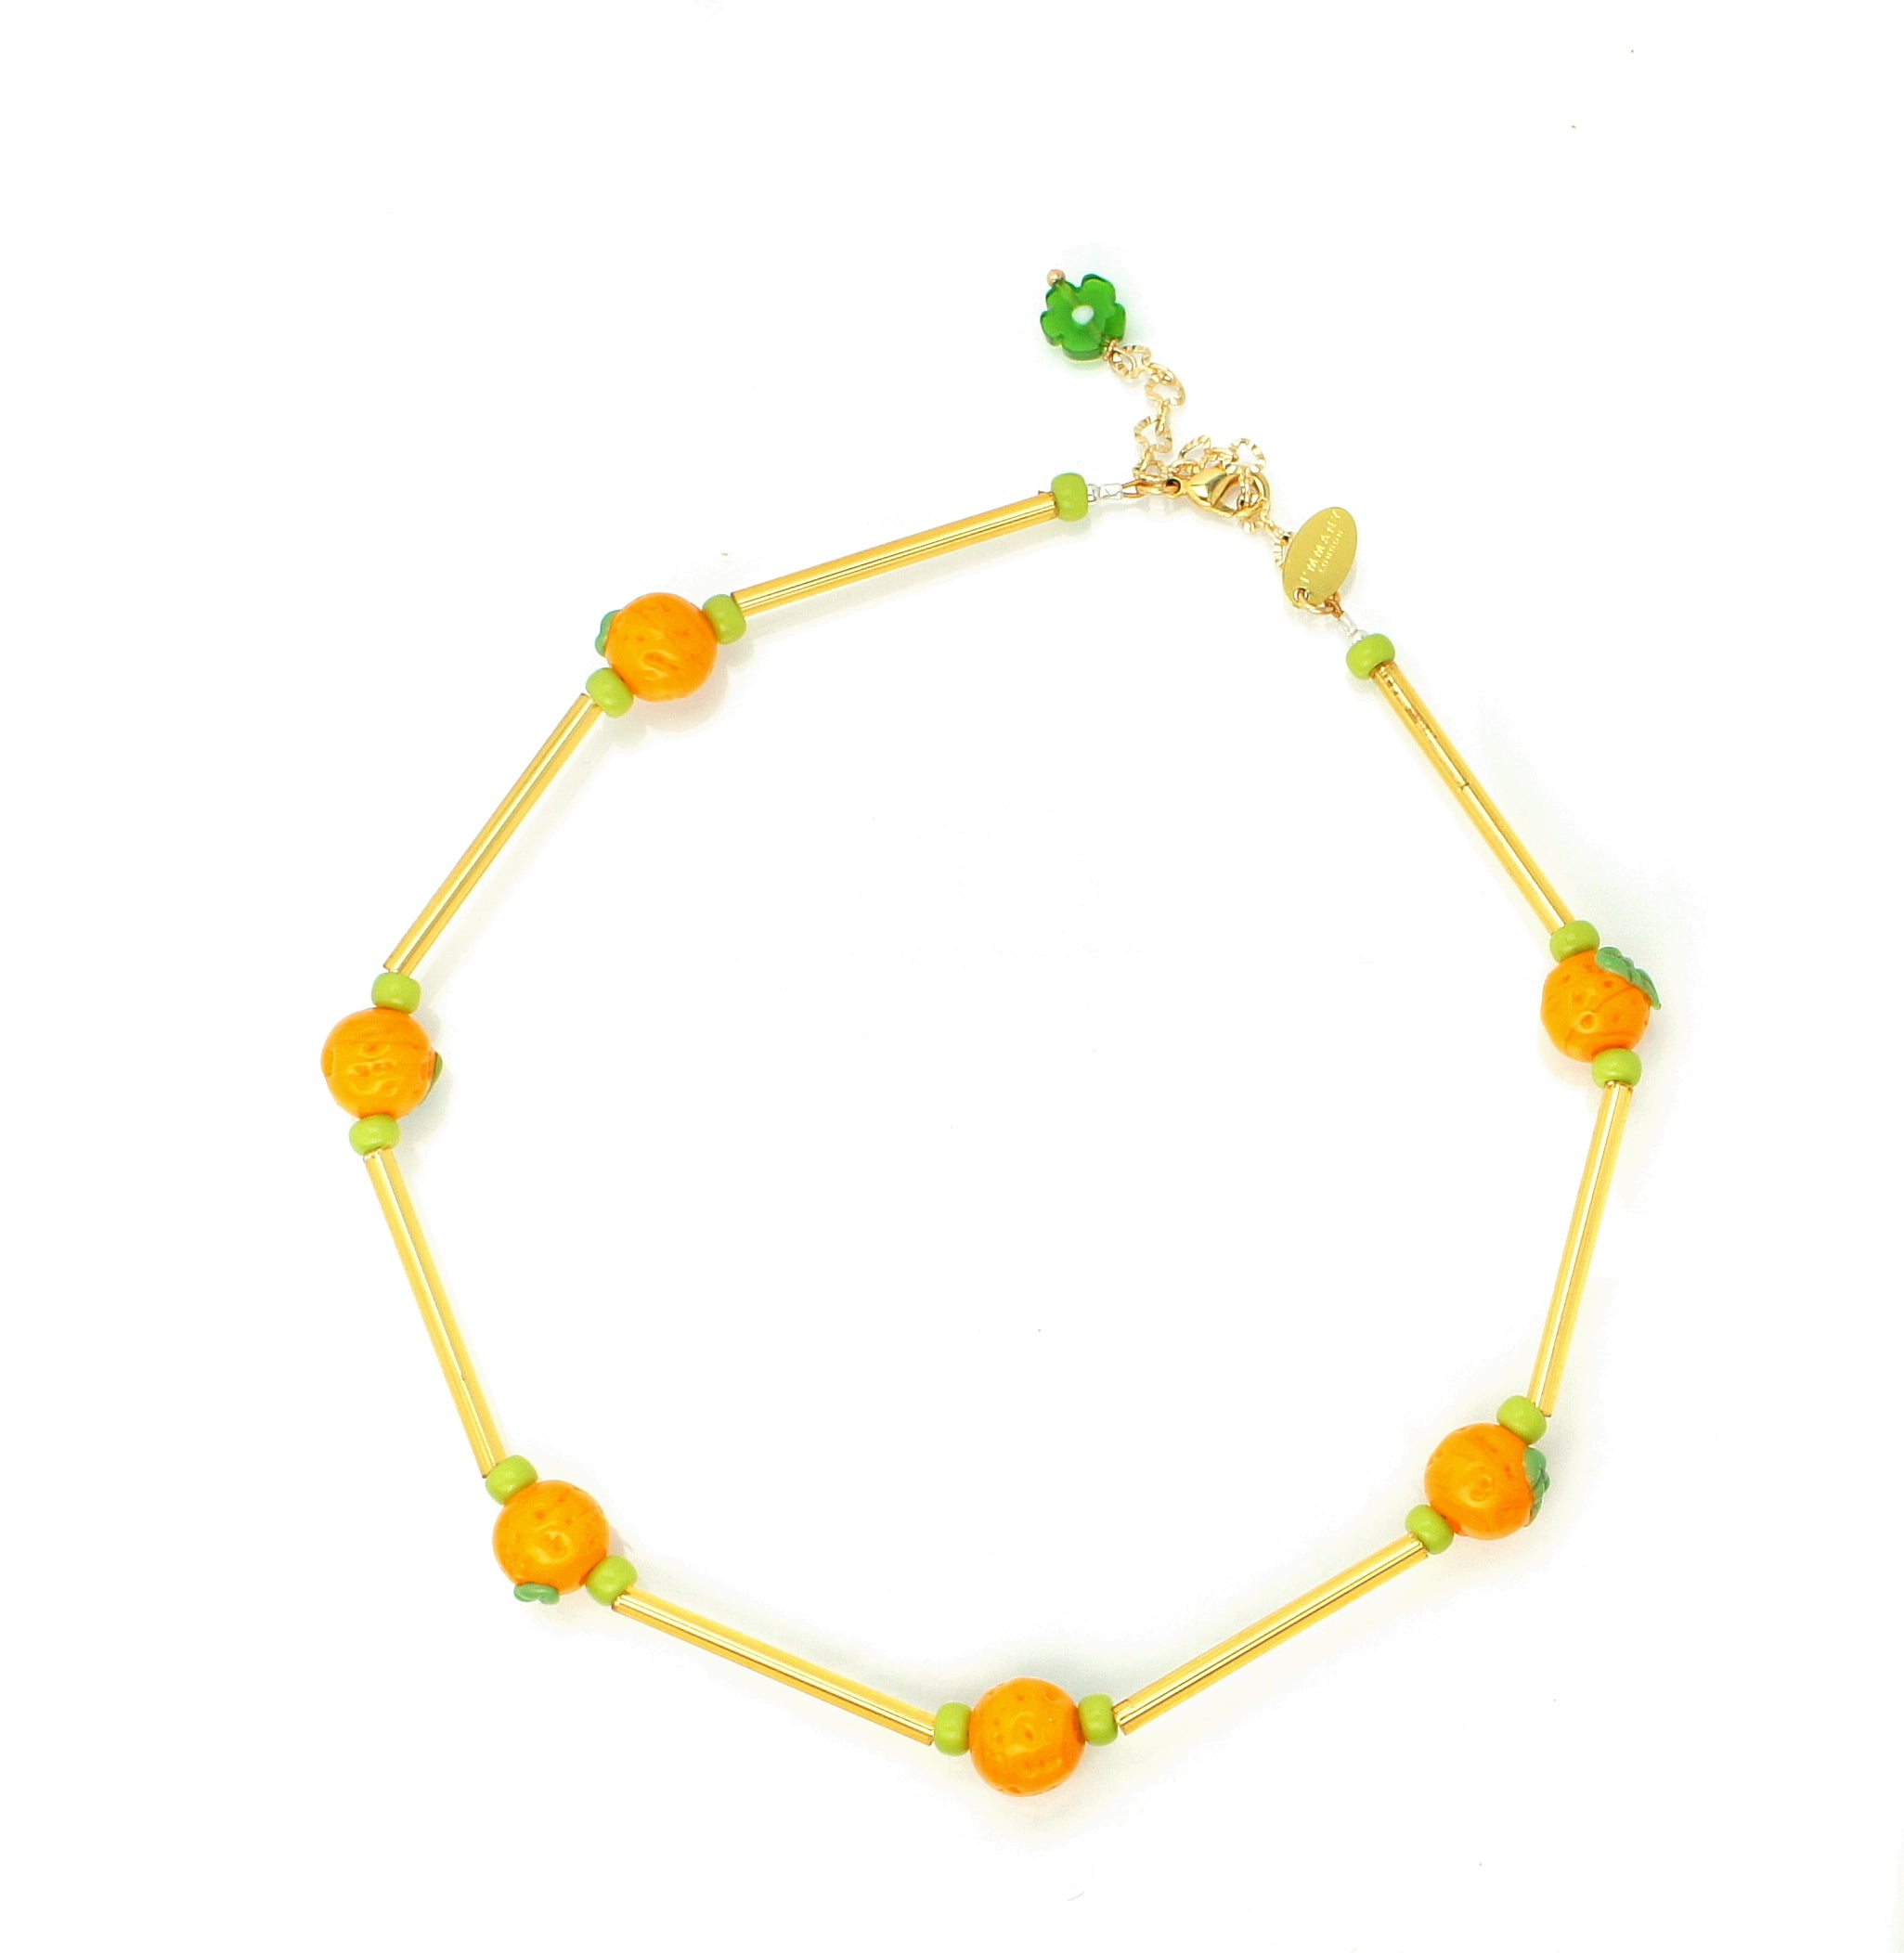 Cutie Pie Glass Tangerine Choker Necklace